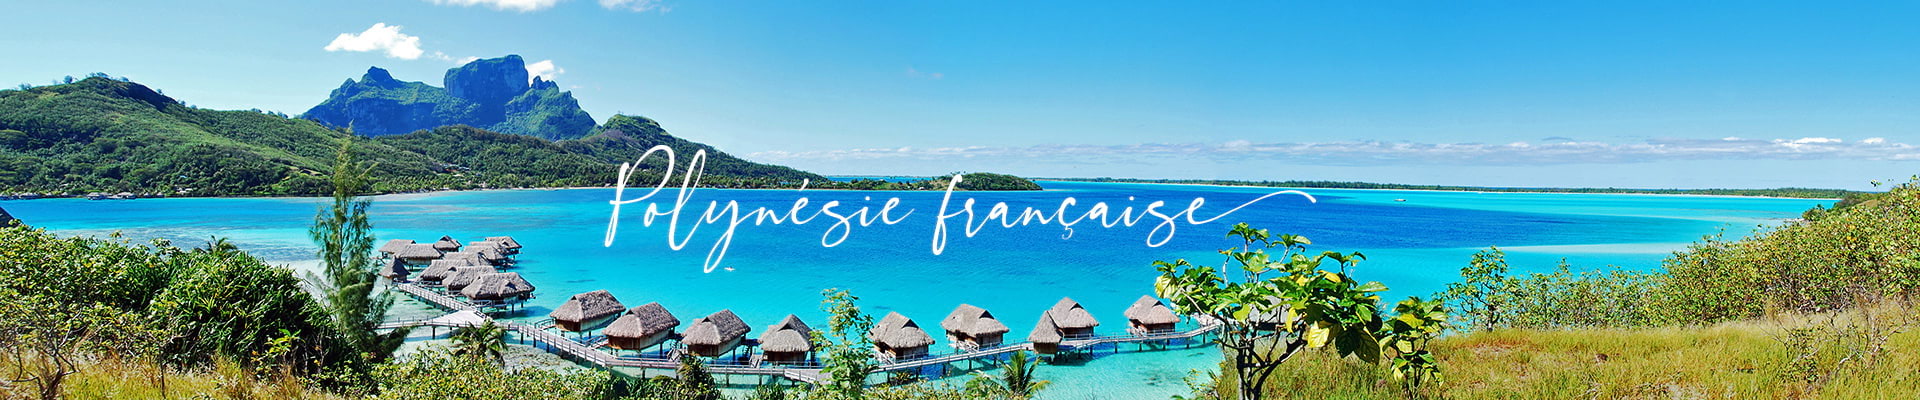 images/panos/desktop/polynesie francaise